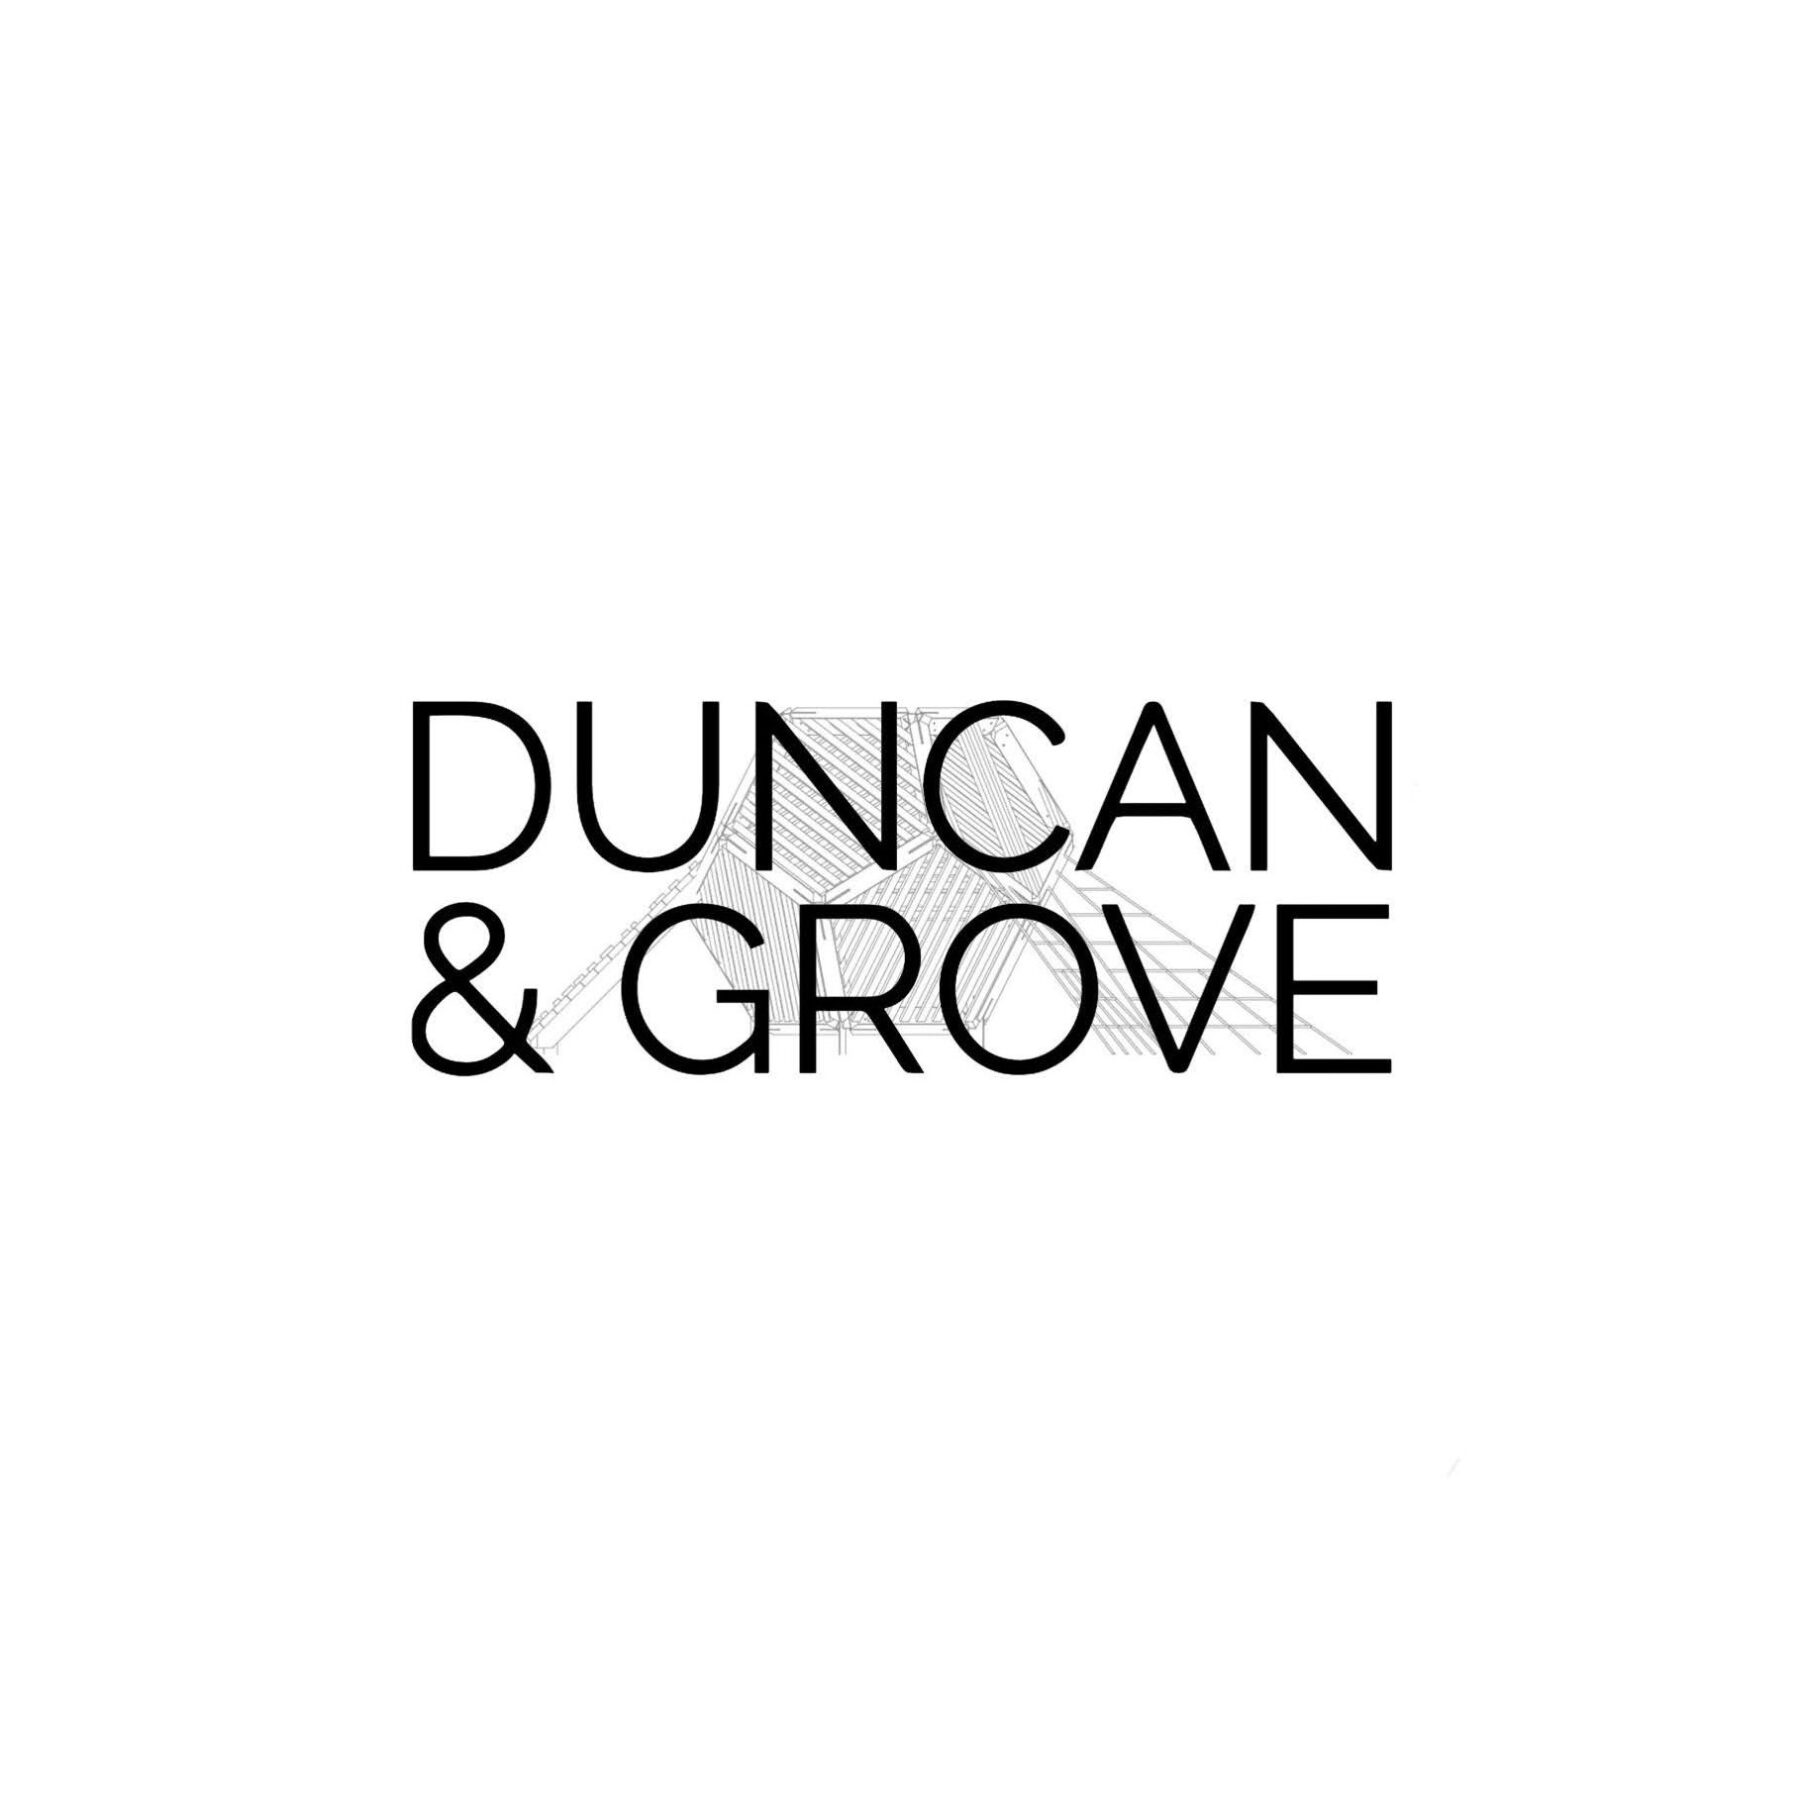 Duncan & Grove